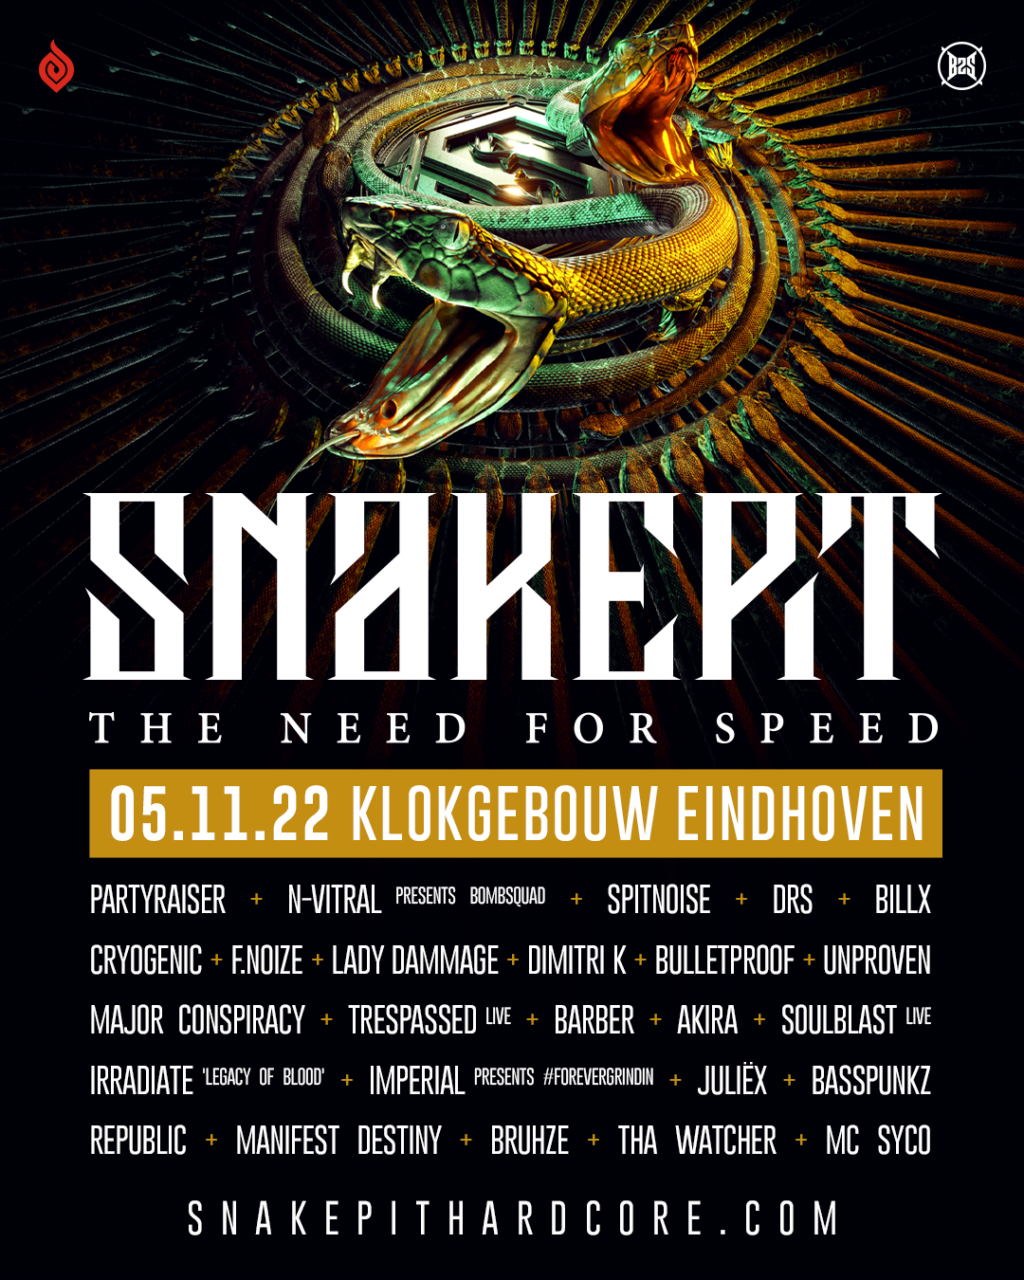 Check the full lineup for Snakepit 2022 now! Art of Dance